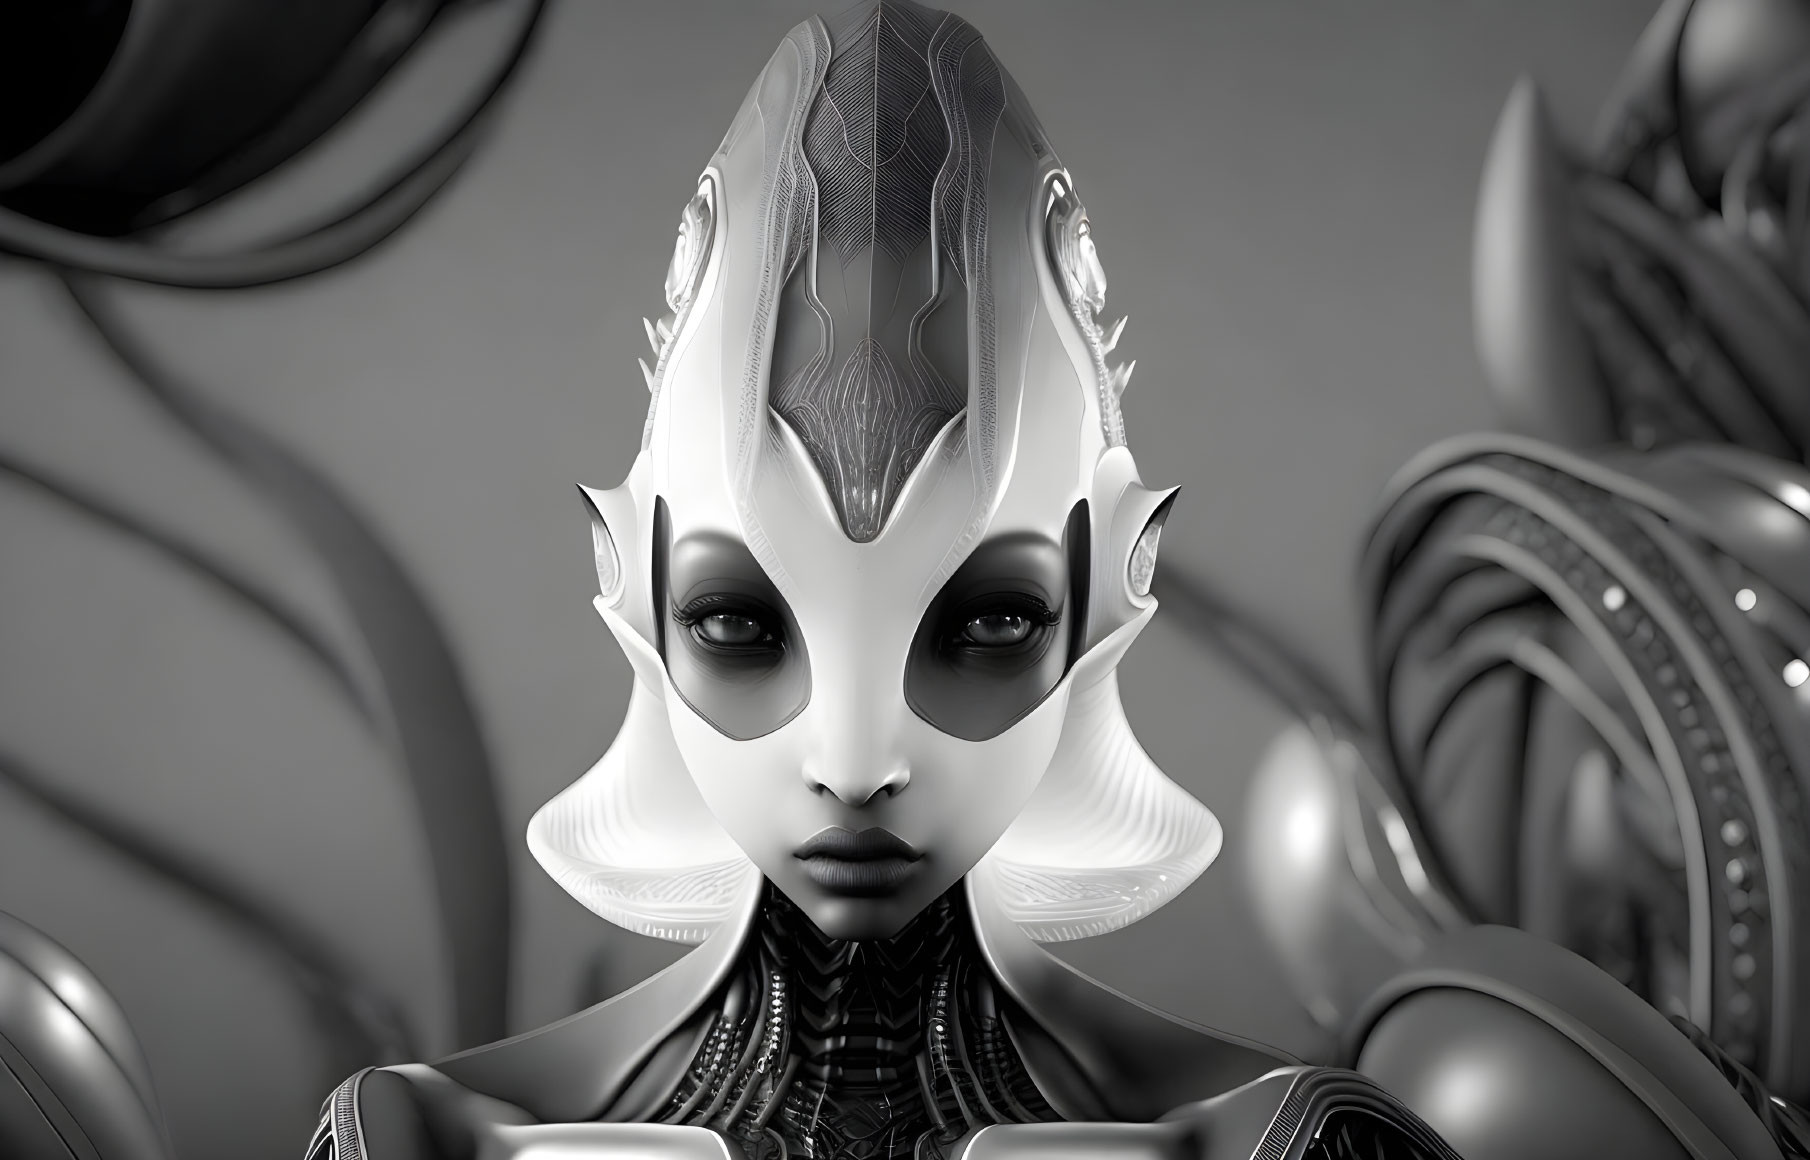 Monochrome stylized humanoid figure with alien-like appearance